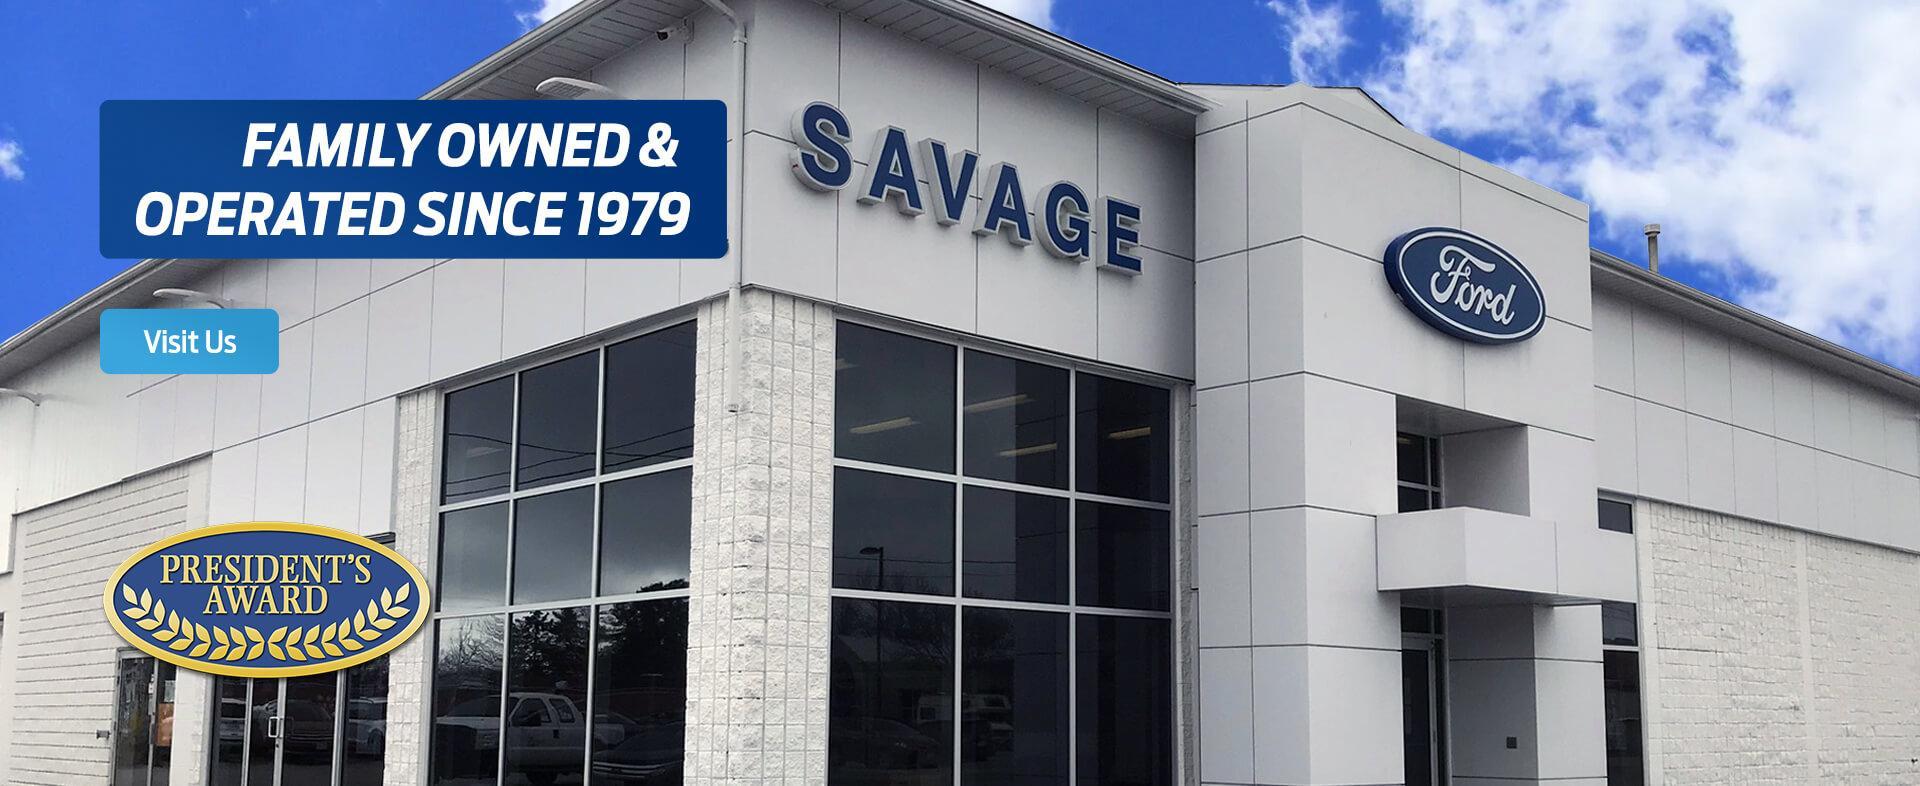 Savage Ford Dealership 